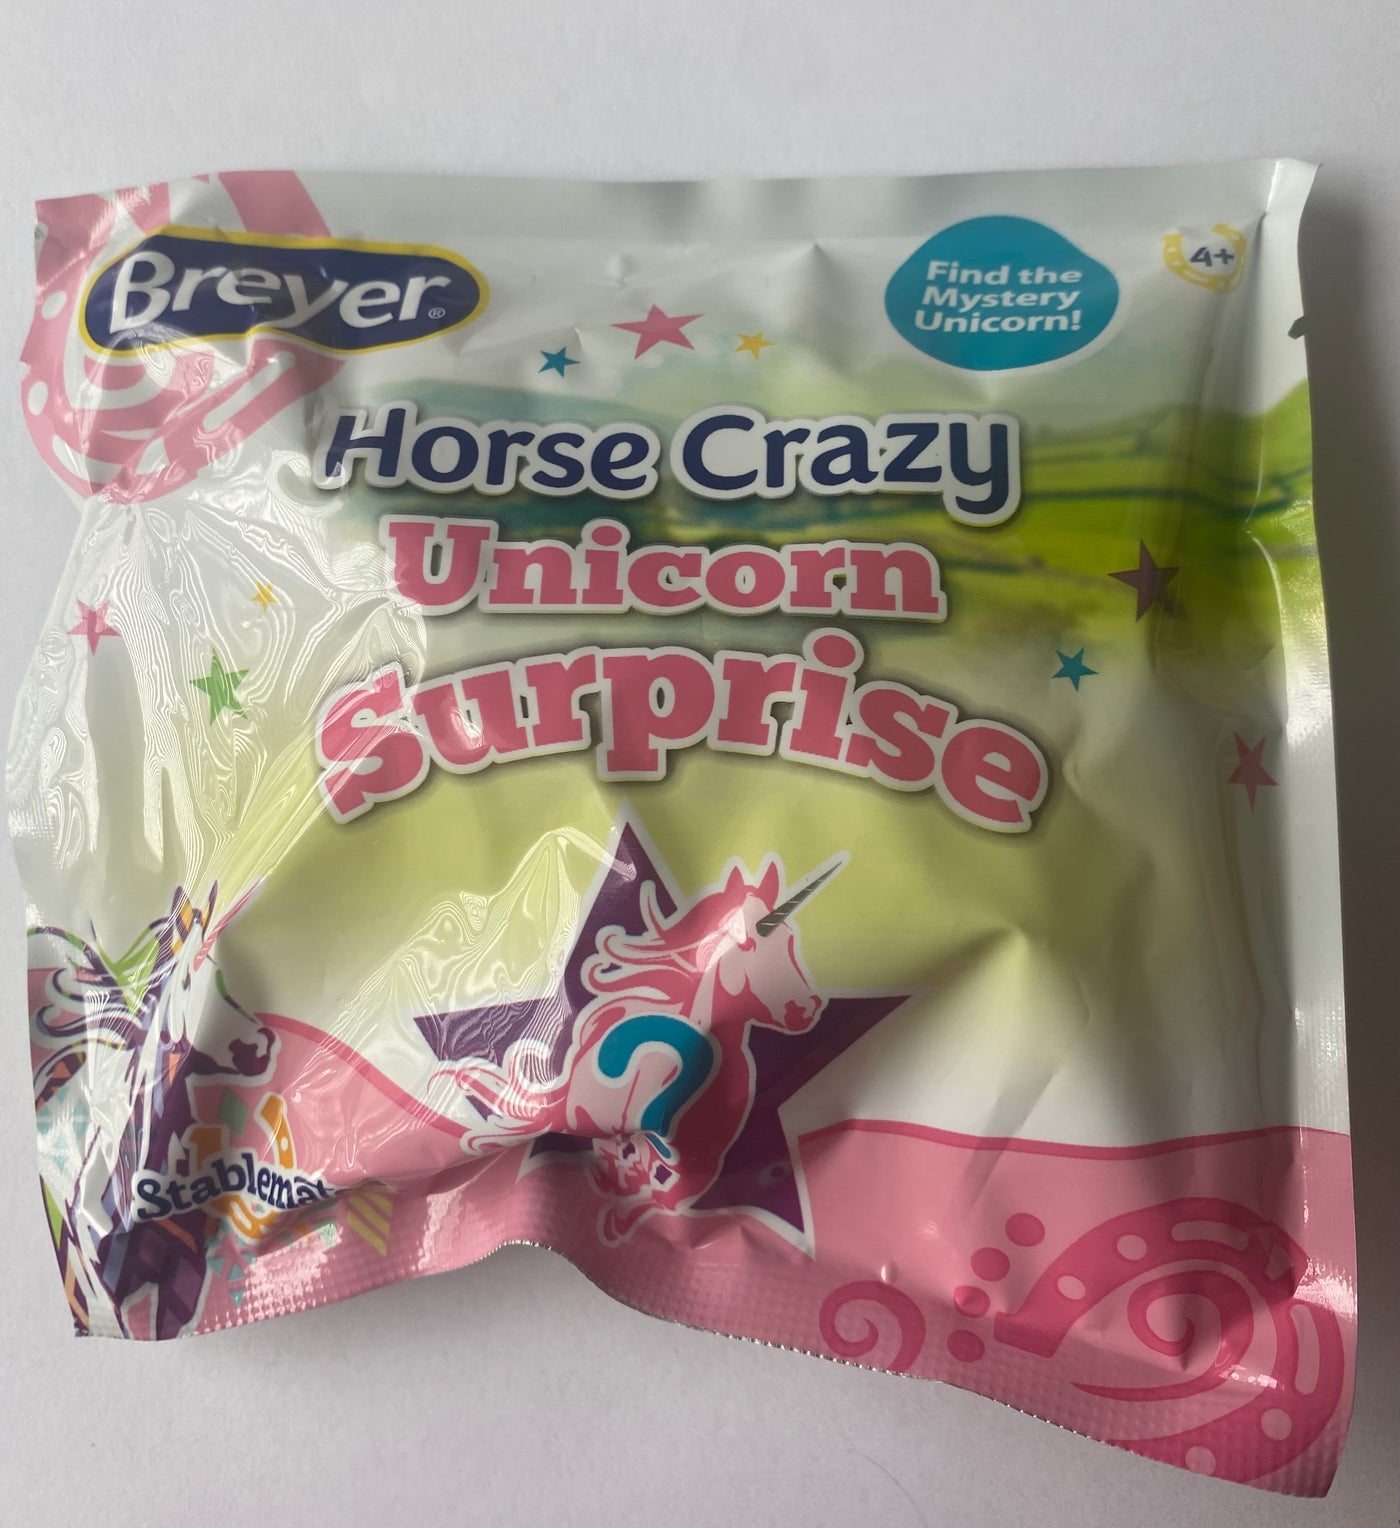 Breyer Horses Crazy Stablemates Unicorn Surprise Scale 1:32 New Blind Bag